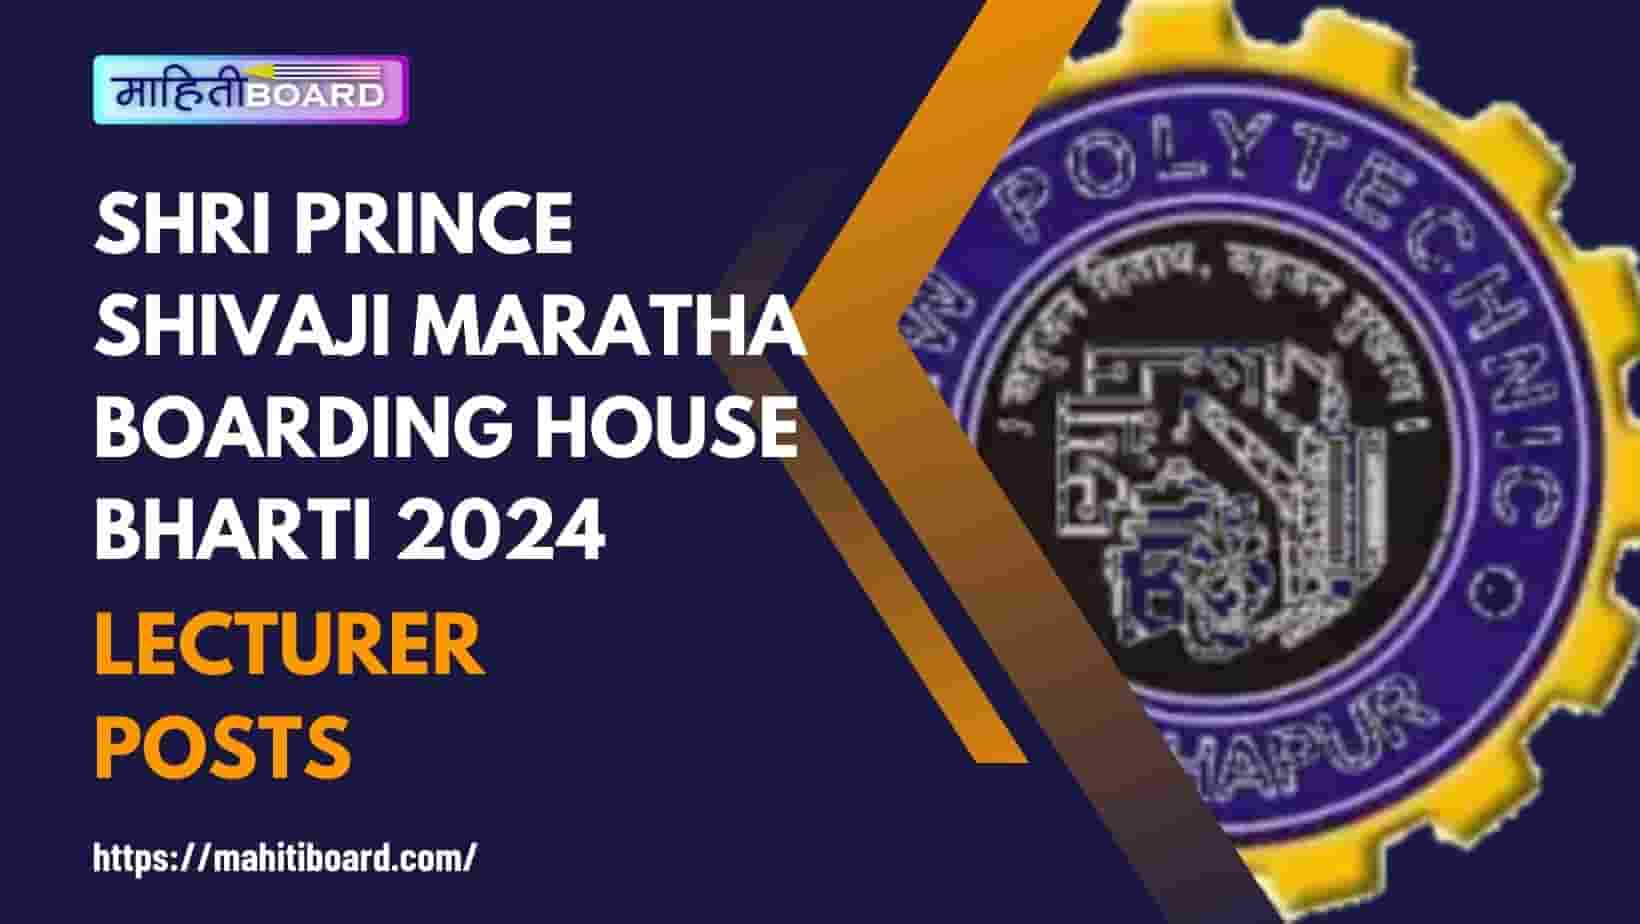 Shri Prince Shivaji Maratha Boarding House Bharti 2024